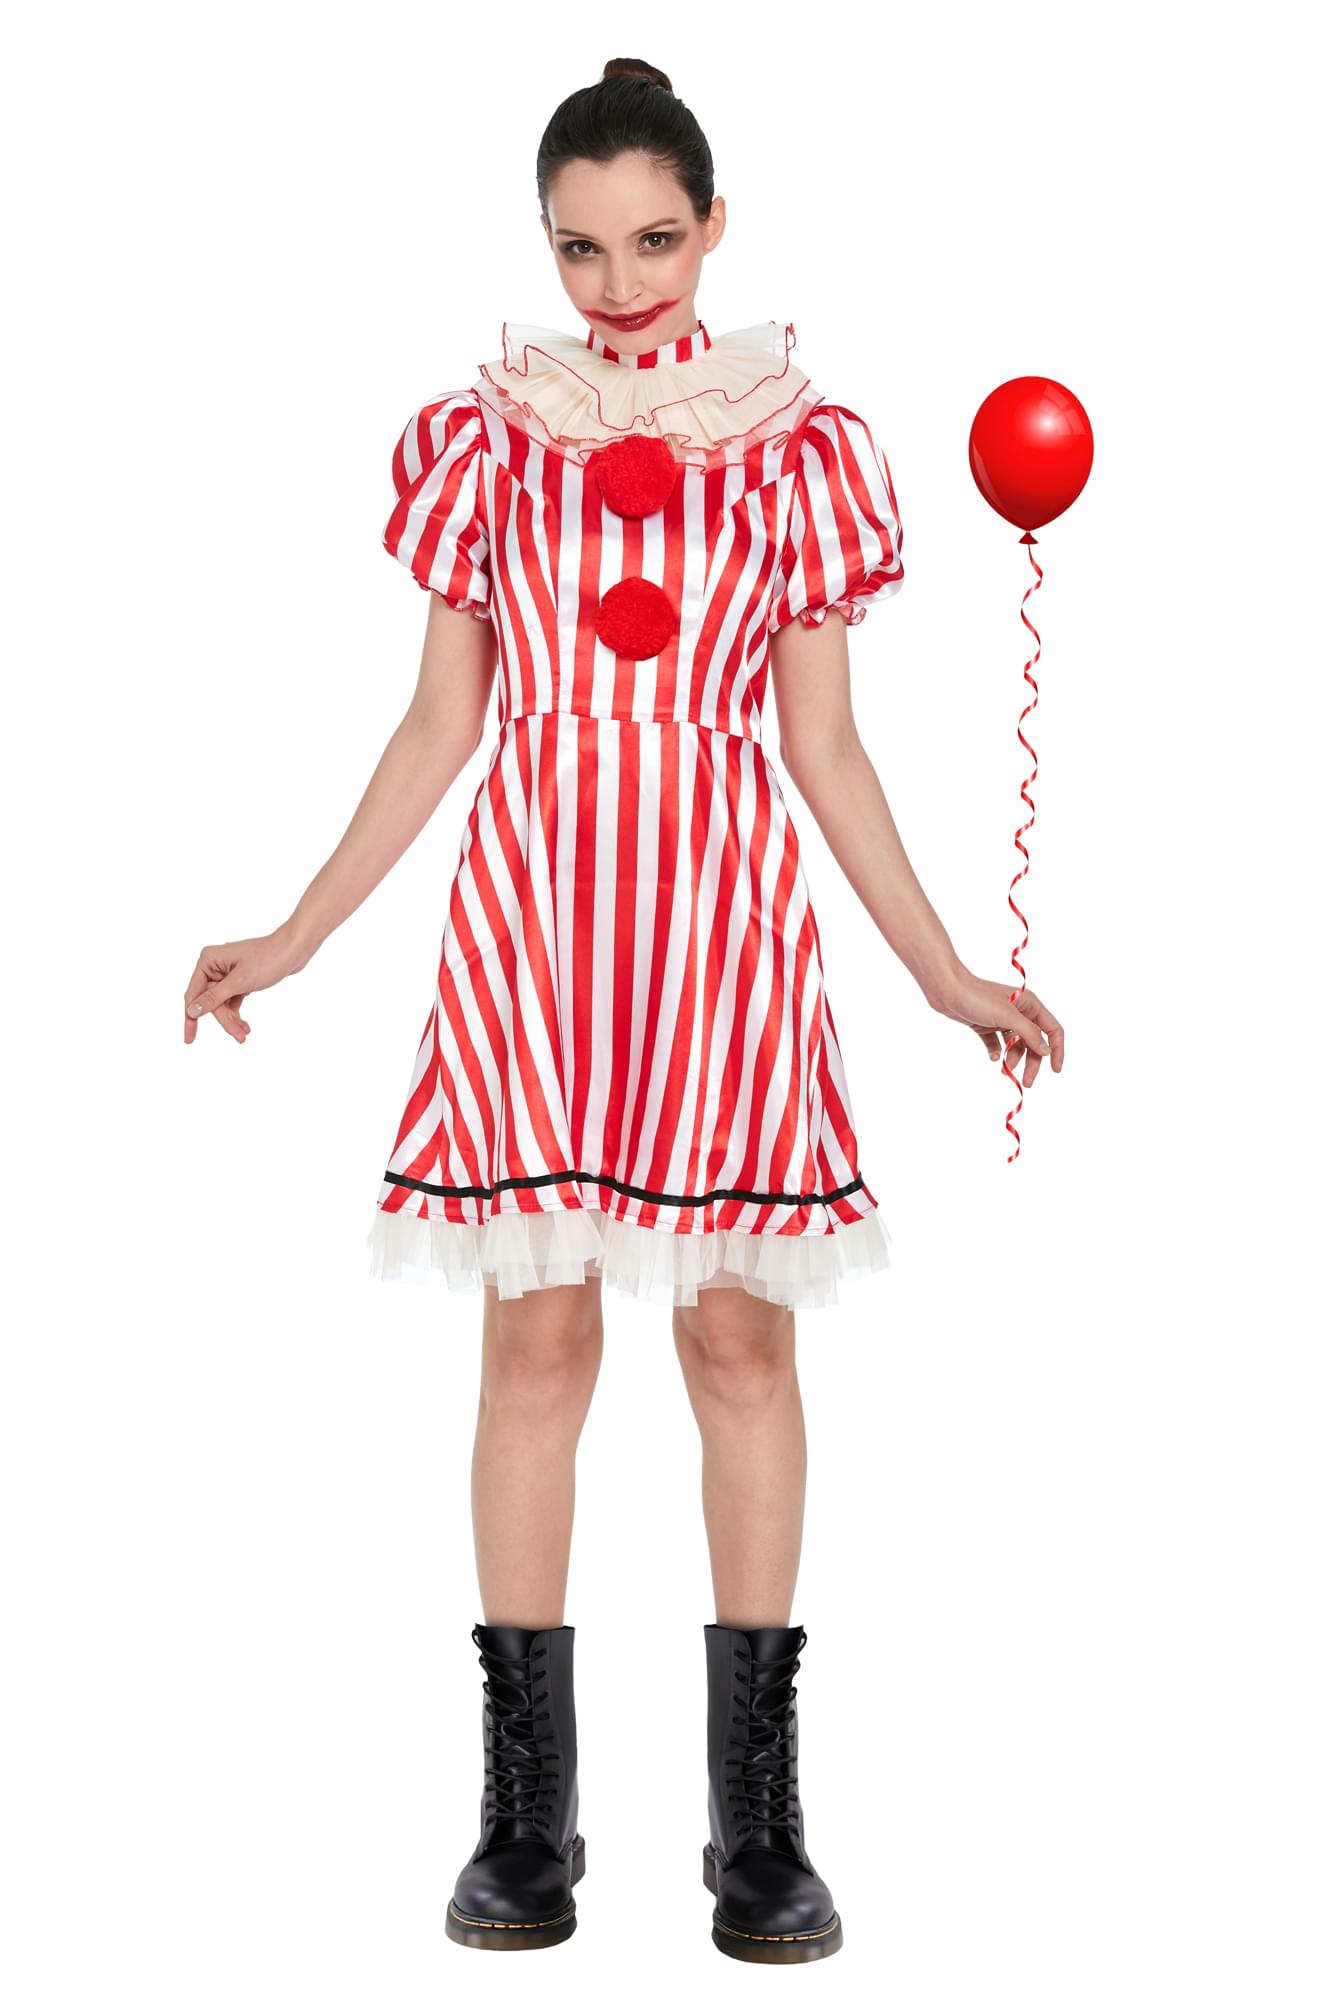 Clown Dress Women's Costume , One Size Fits Most